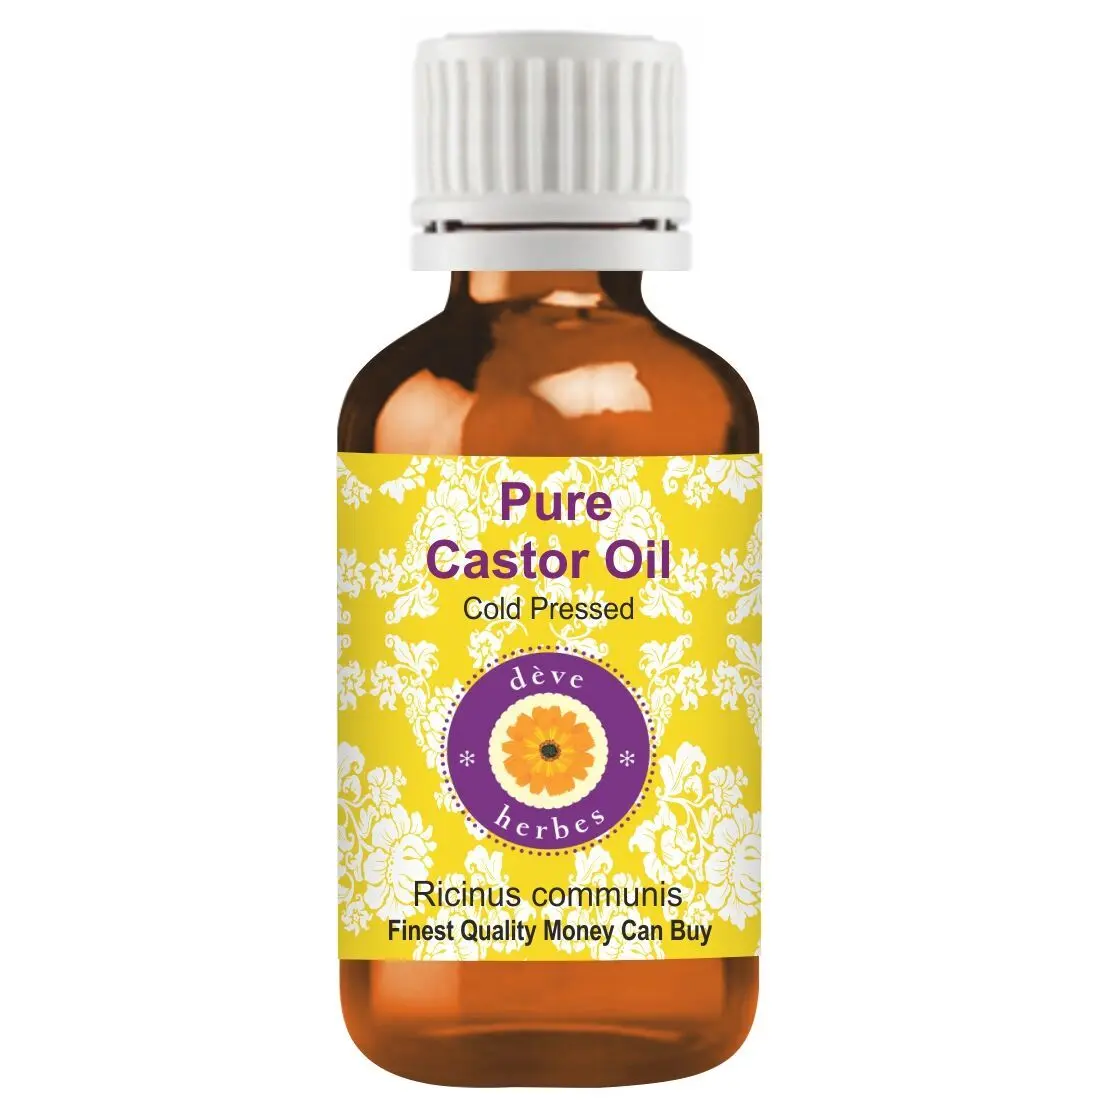 Deve Herbes Pure Castor Oil (Ricinus communis) 100% Natural Therapeutic Grade Cold Pressed (50 ml)